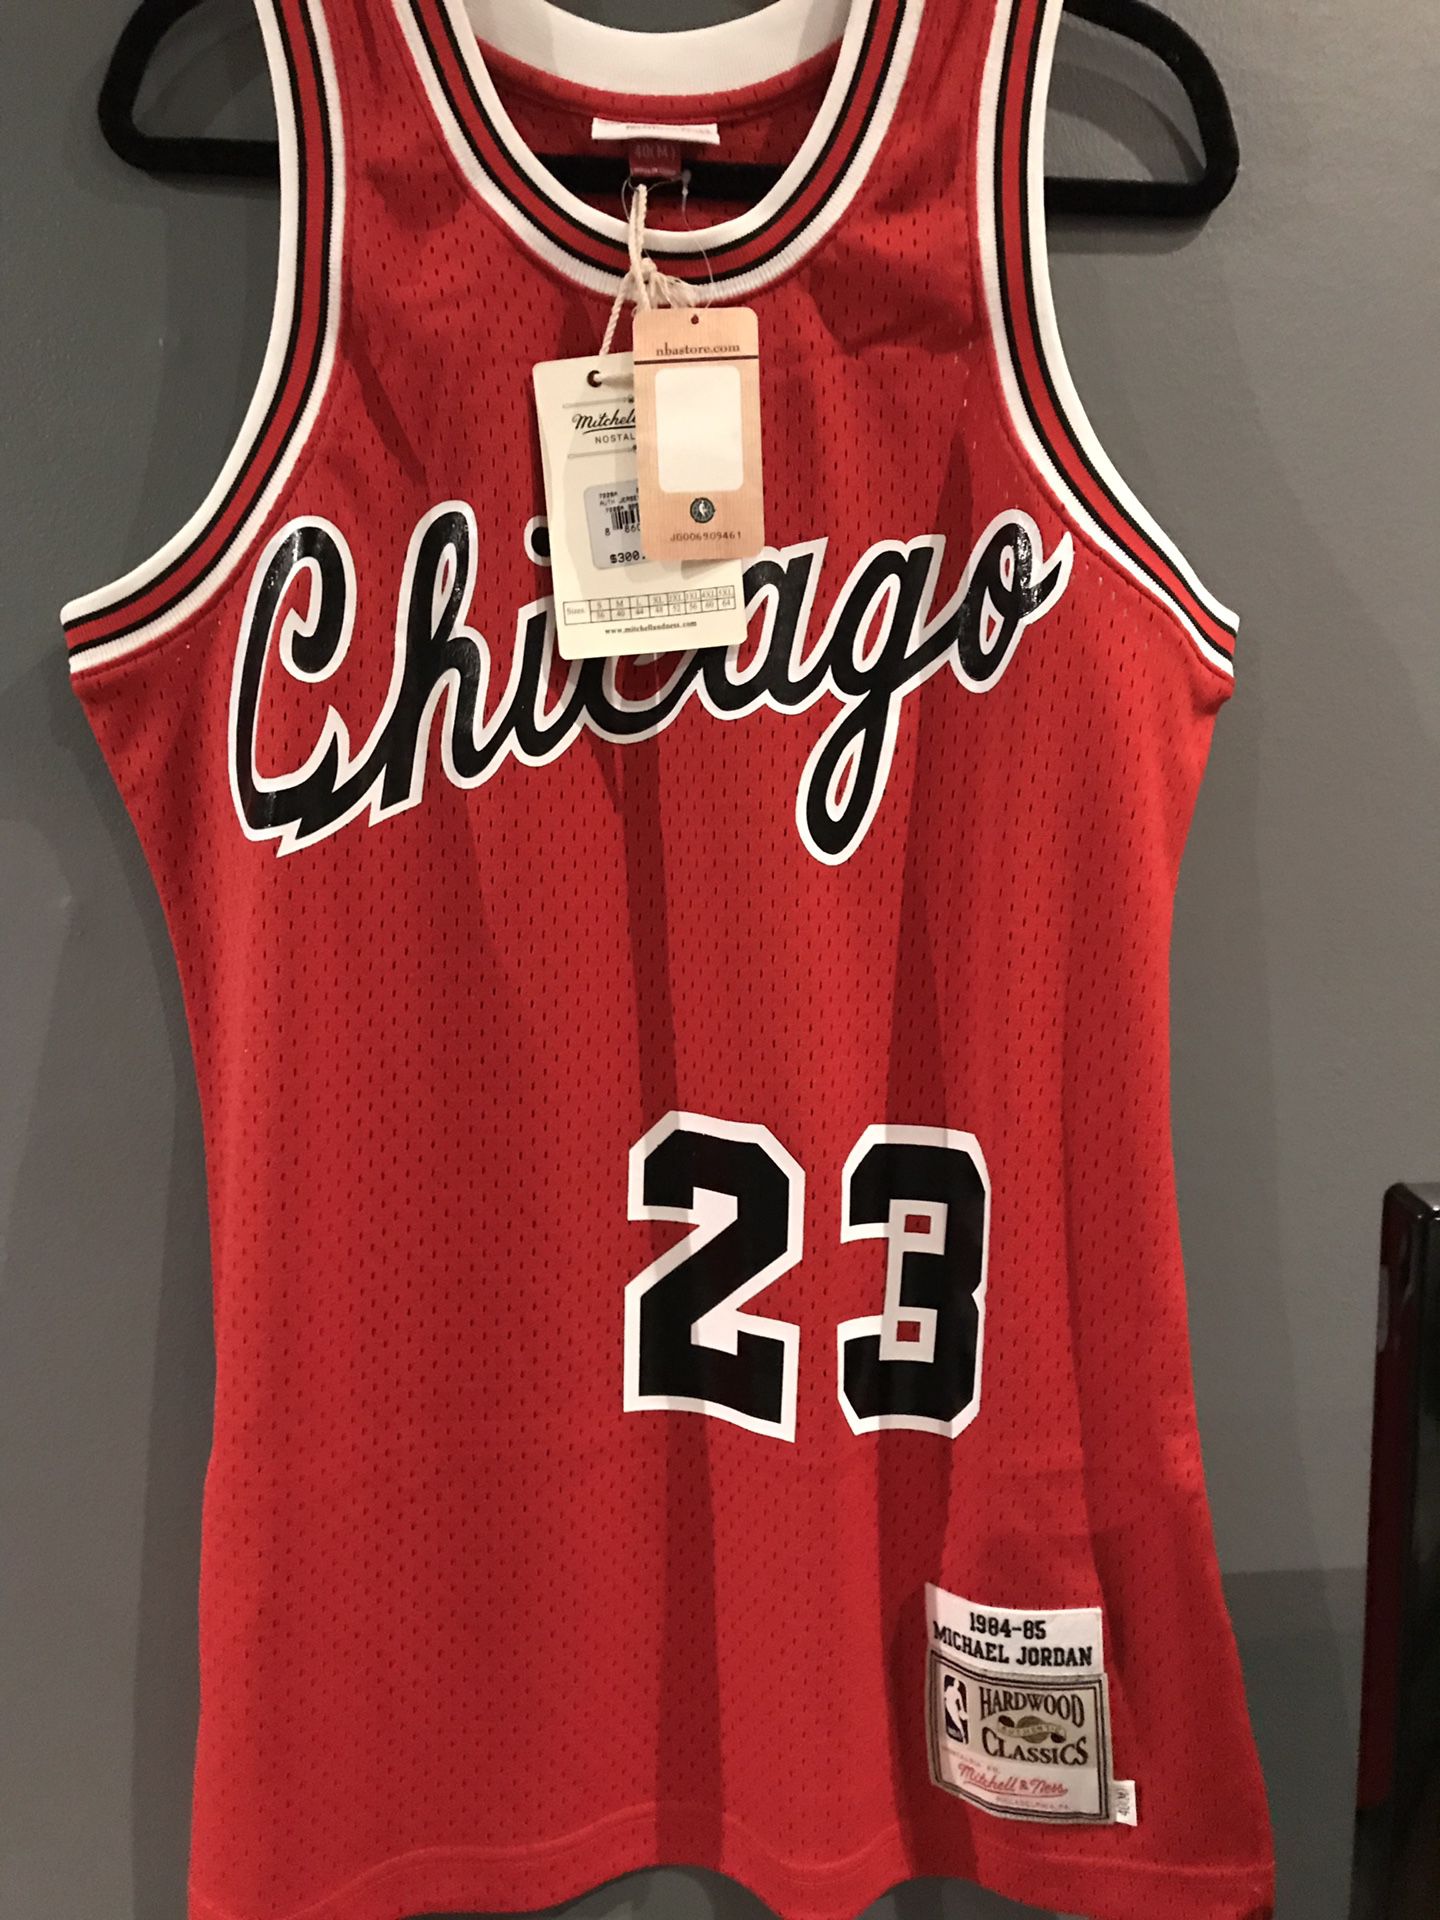 Mitchell Ness Michael Jordan Chicago Bulls Red 1984-85 Hardwood Classics Rookie Authentic Jersey Size Medium